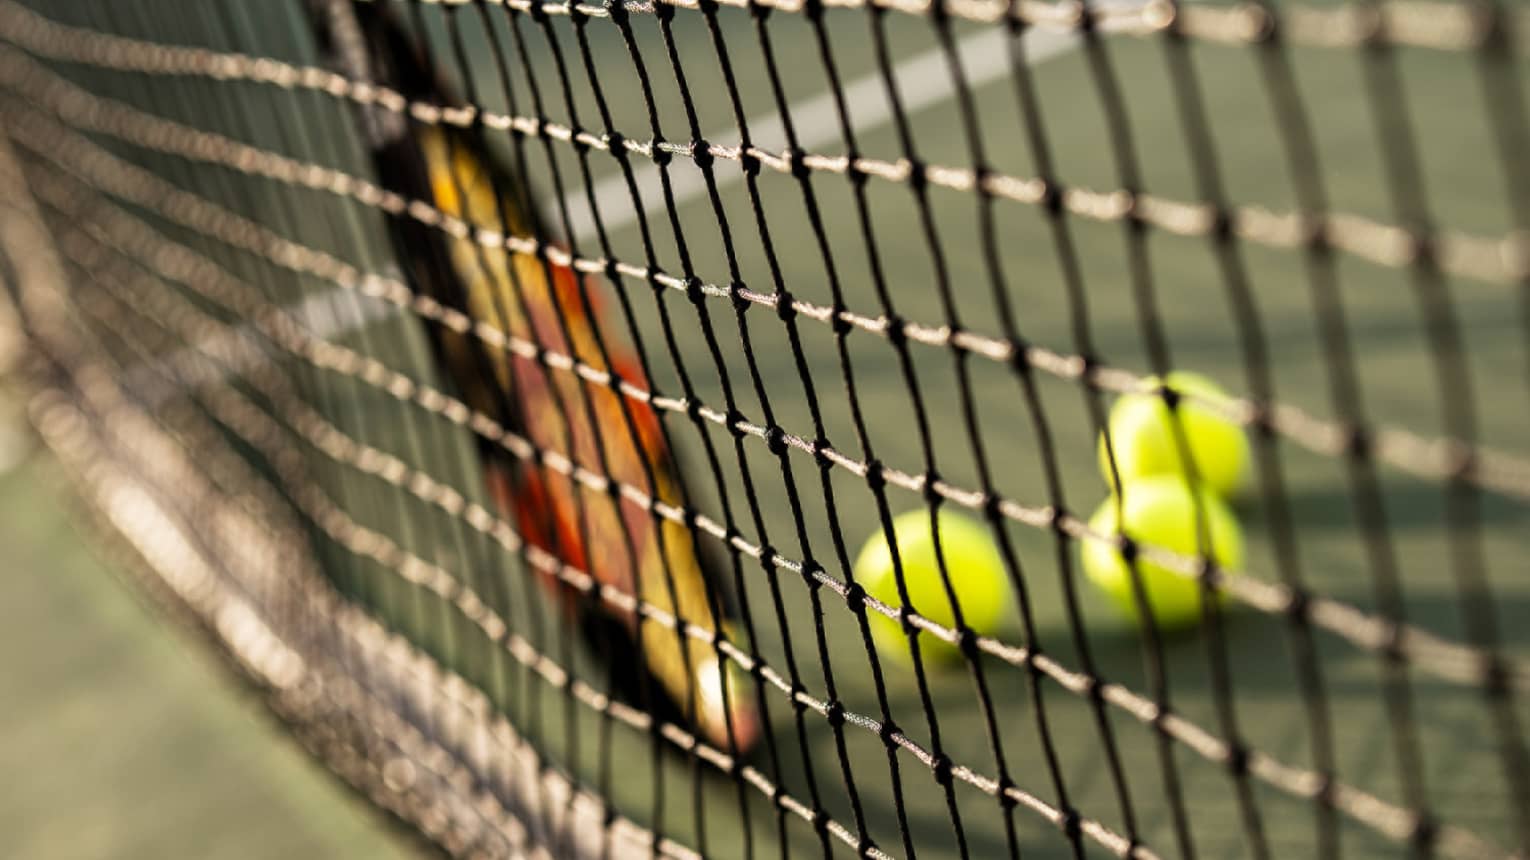 Close-up of tennis racket against net, three green tennis balls on ground